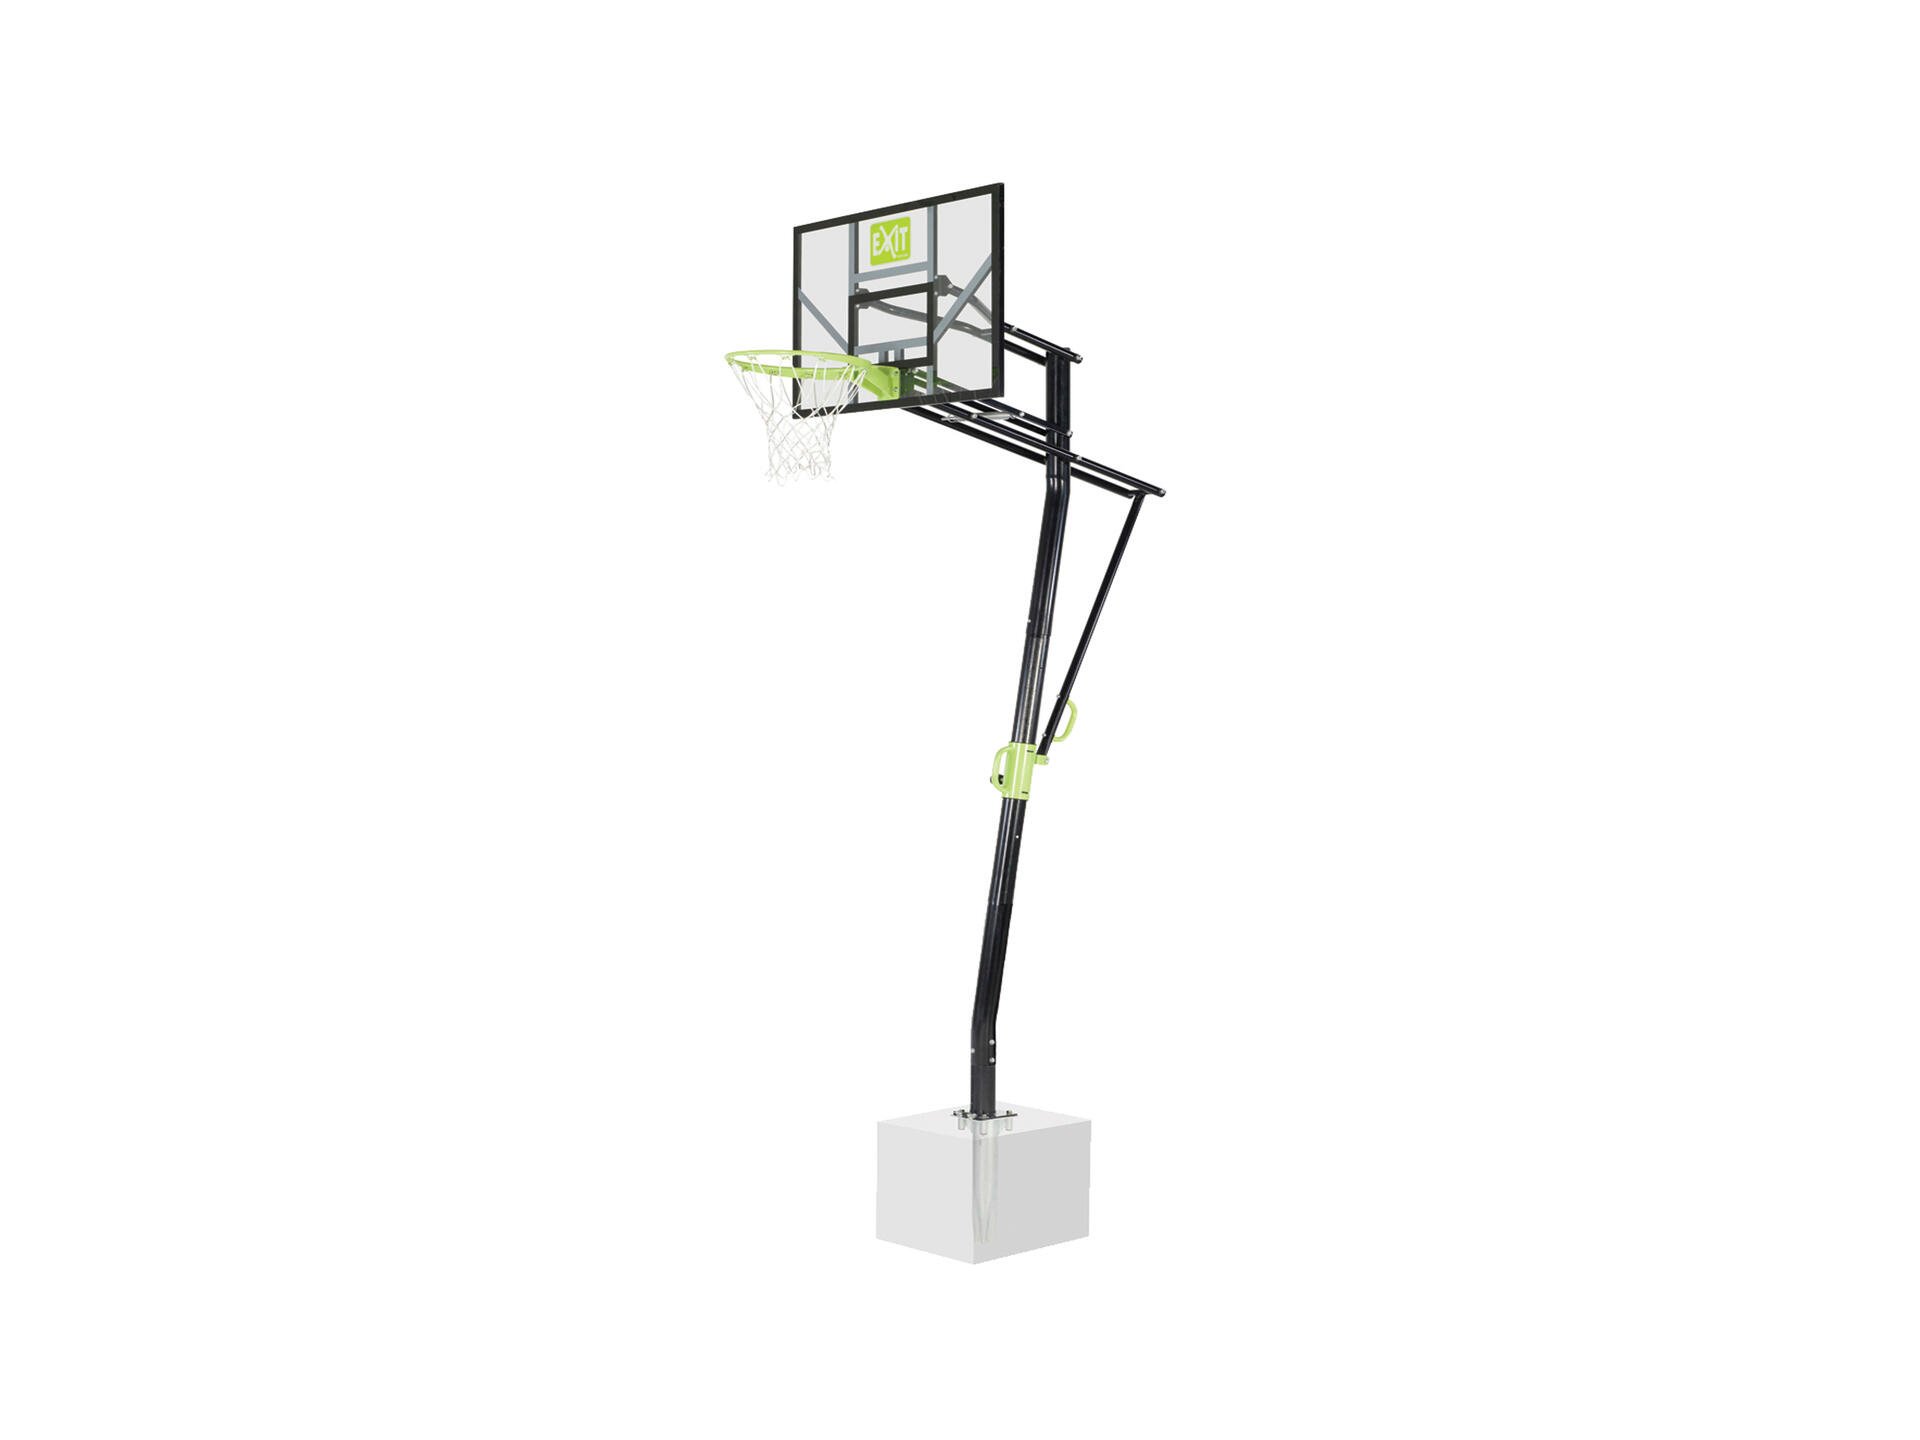 Exit Toys Galaxy basketbalbord grondmontage groen/zwart